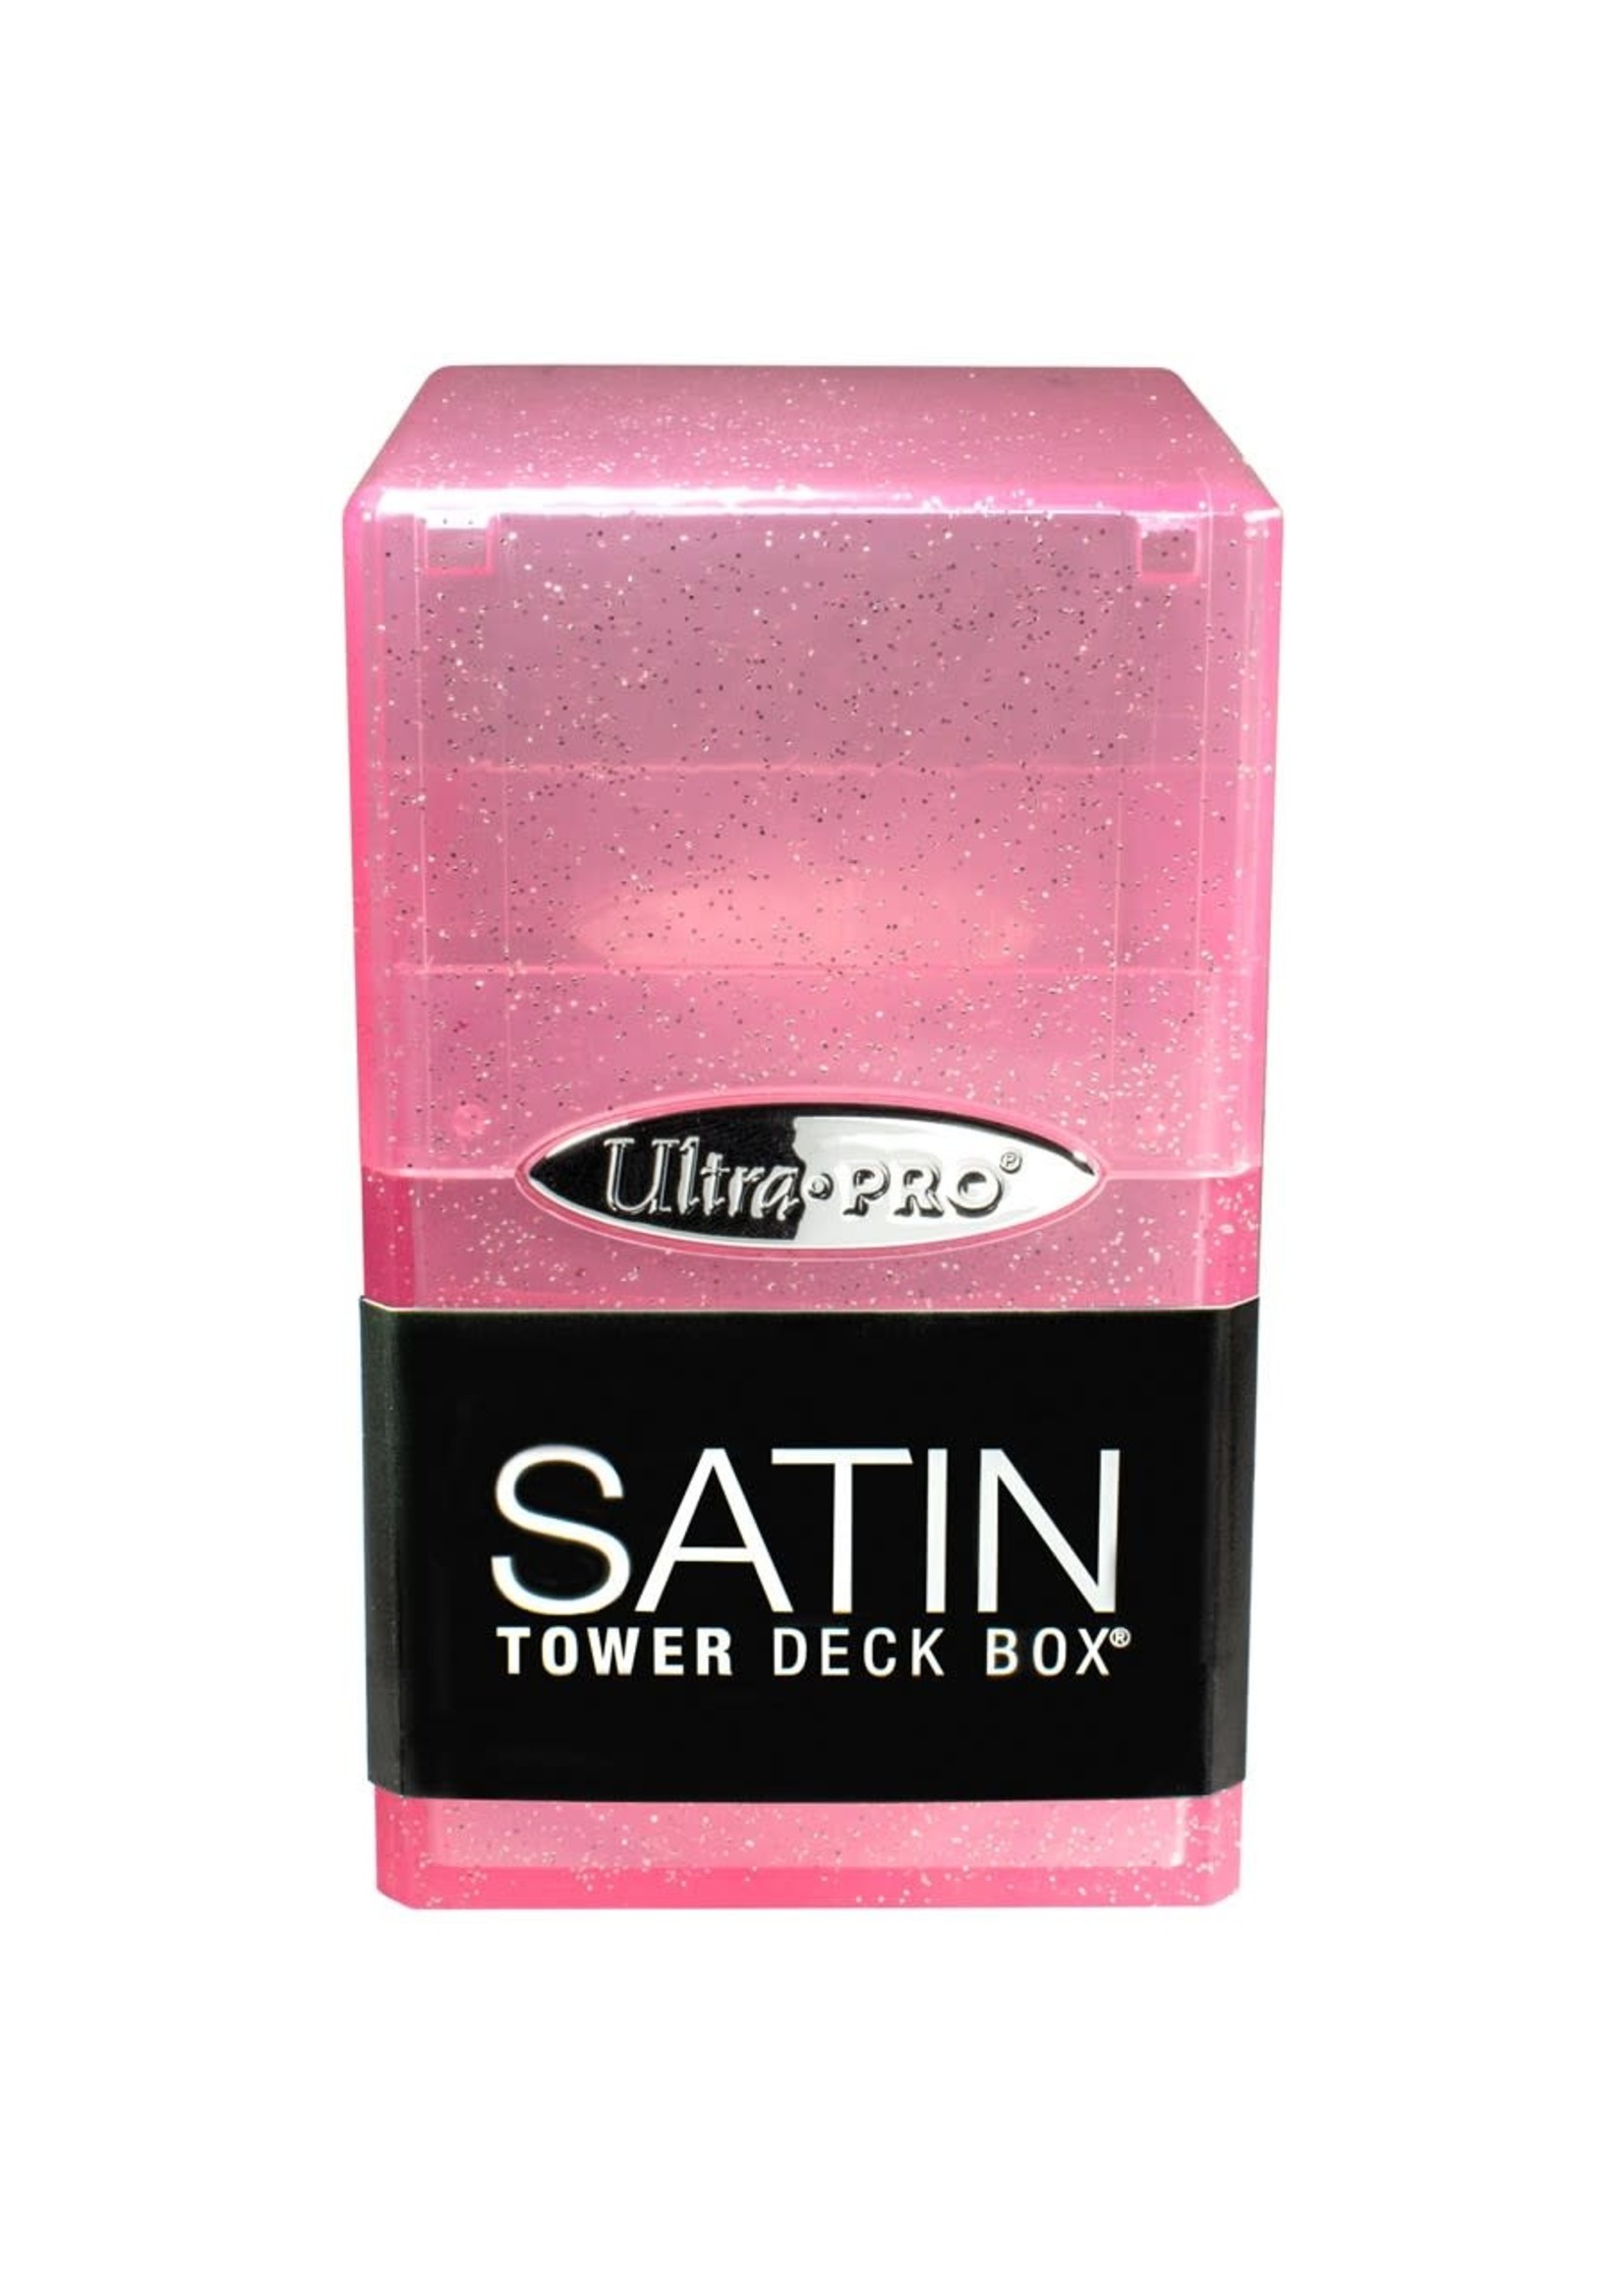 Ultra Pro Satin Tower Deck Box: Glitter Pink